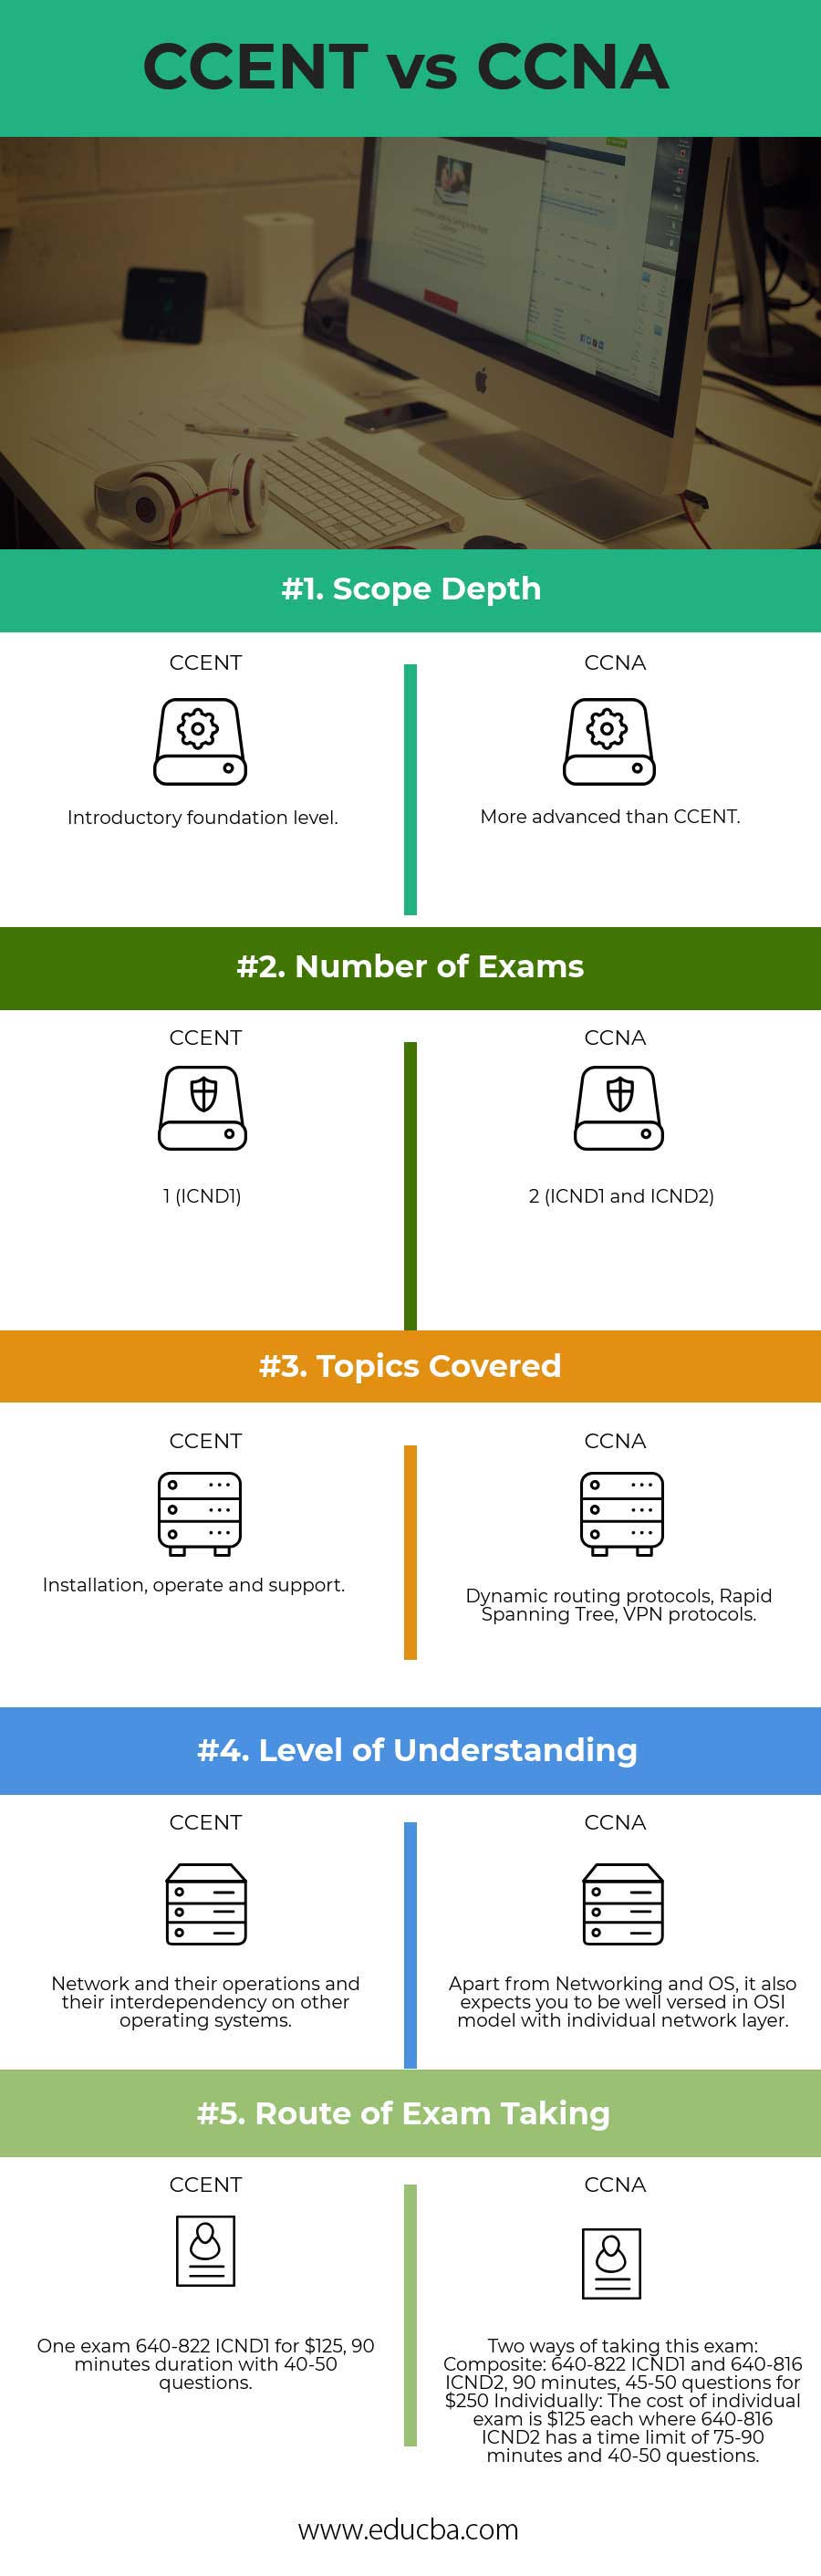 CCNA vs CCENT Infographics